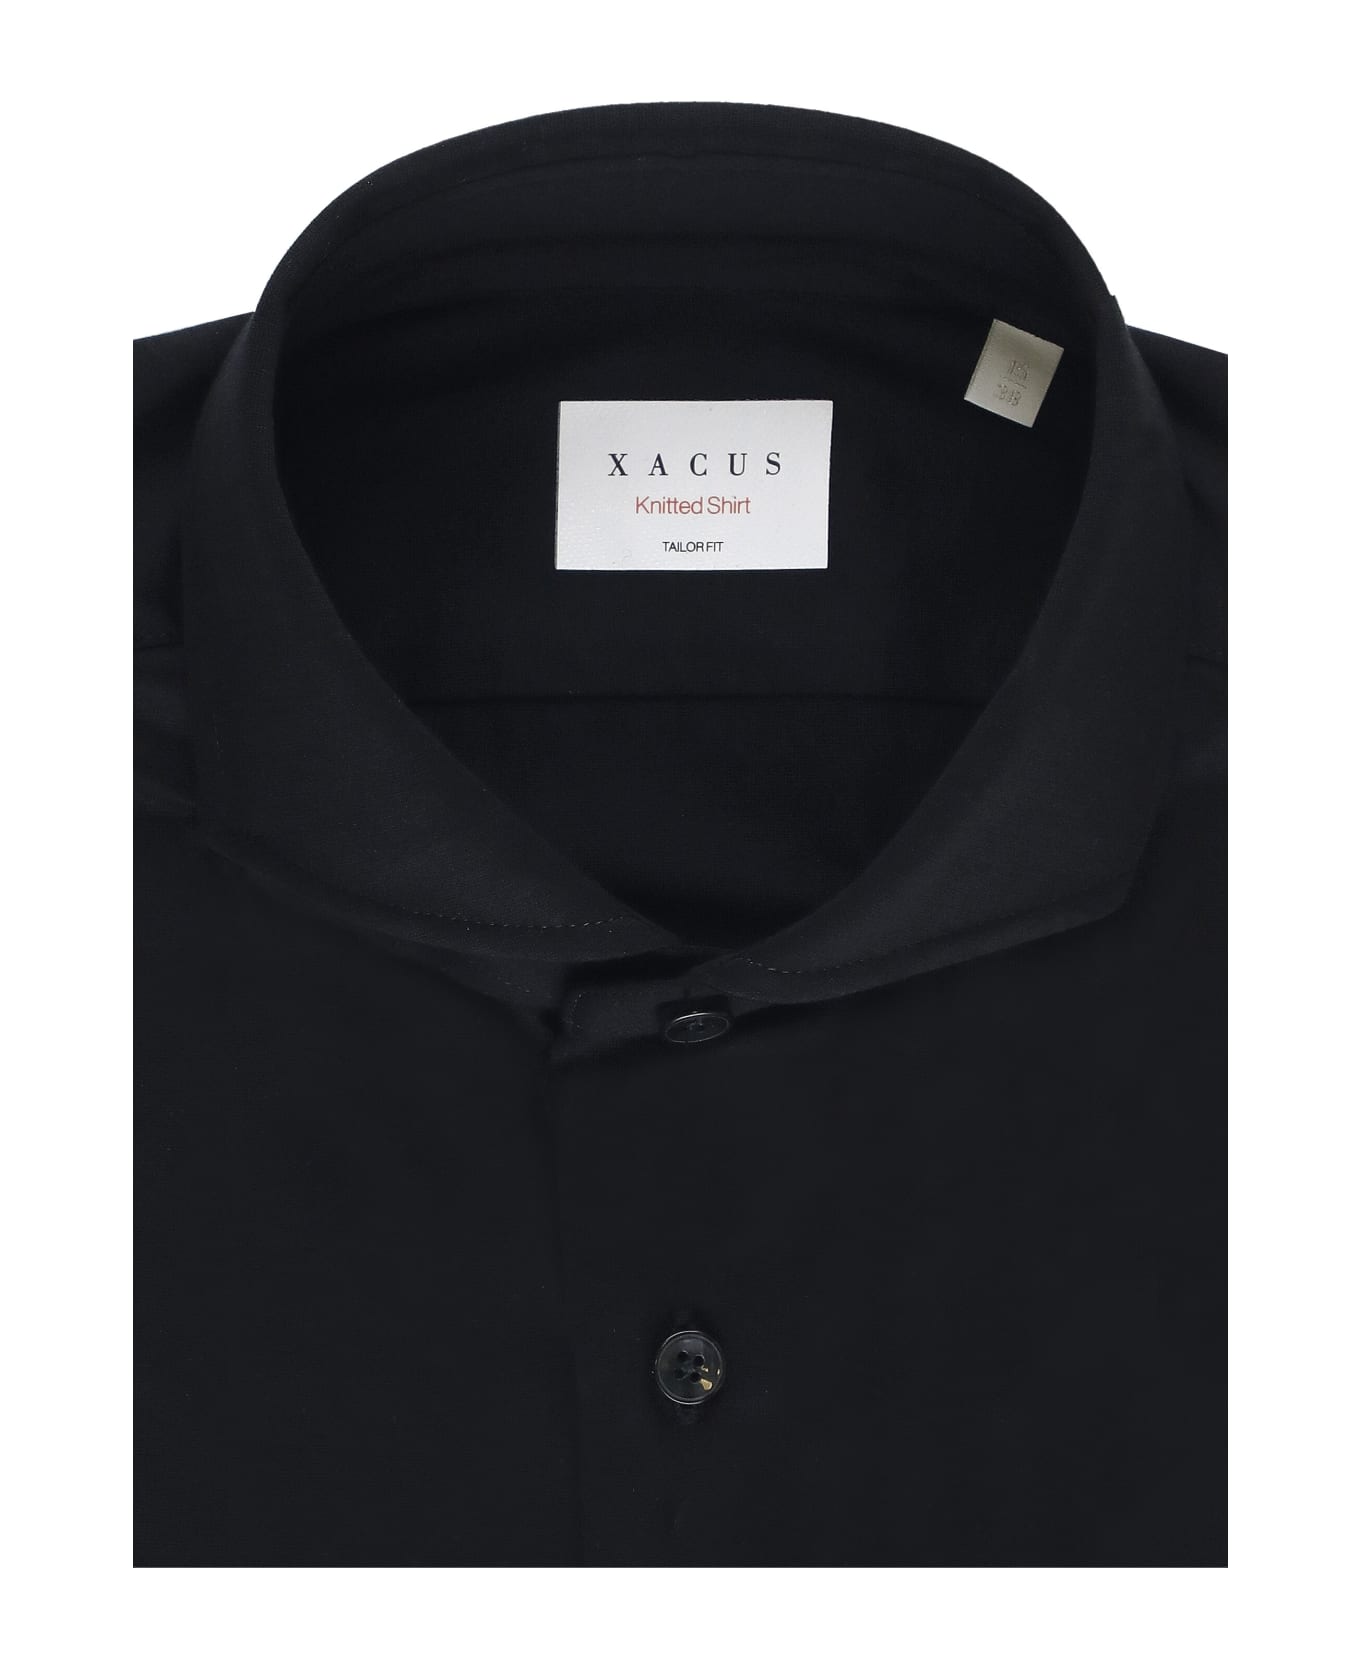 Xacus Knitted Shirt - Black